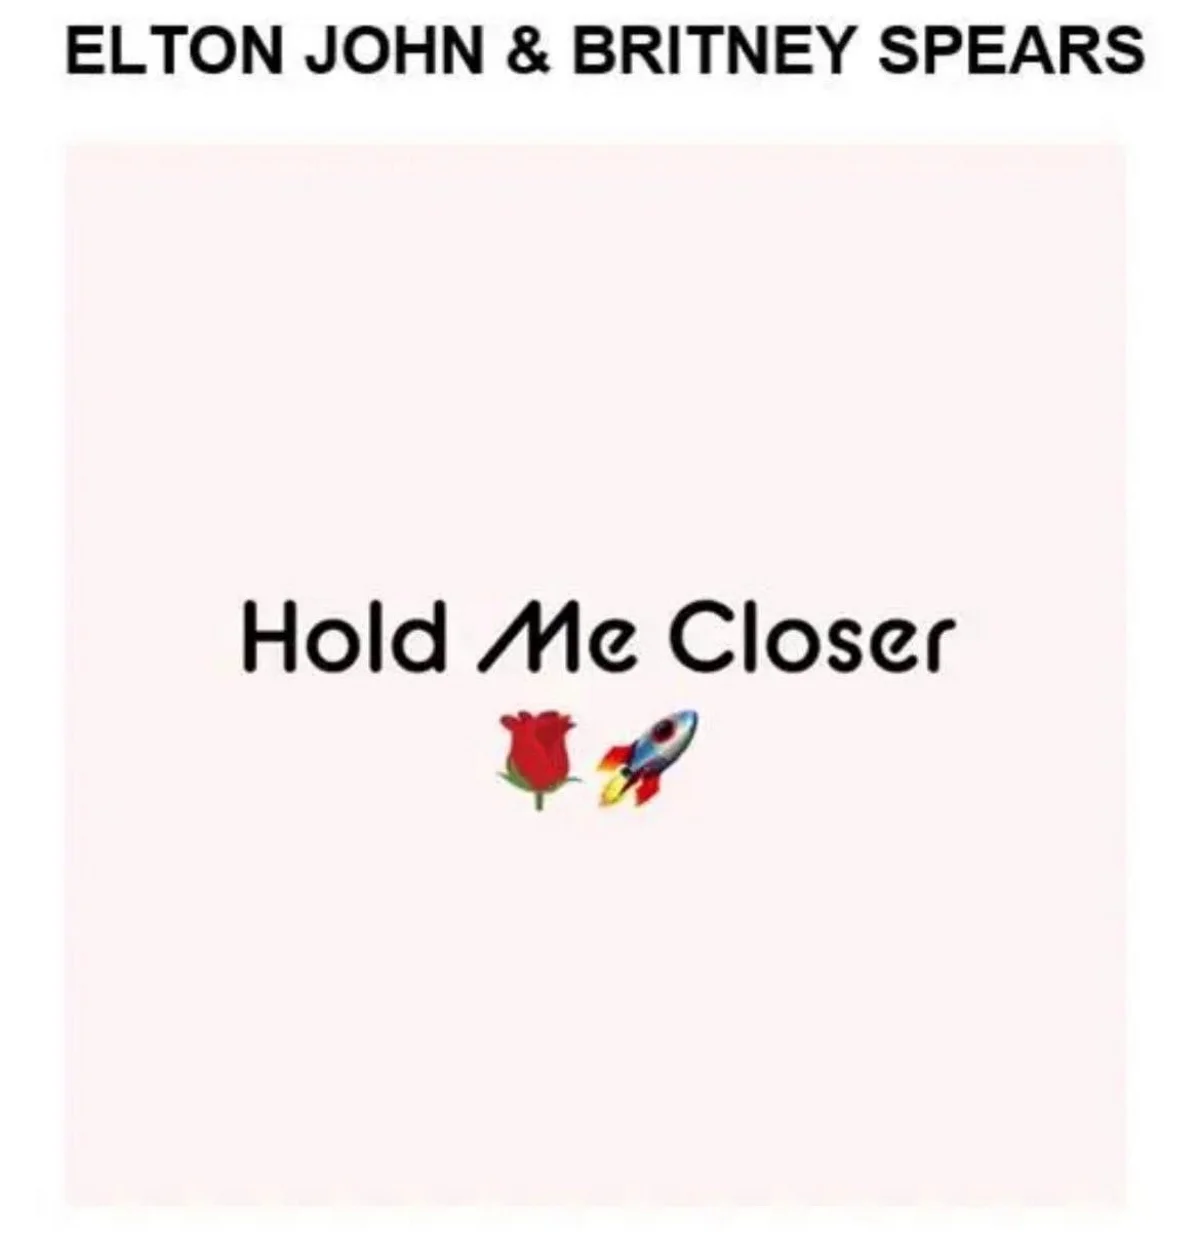 Бритни Спирс и Элтон Джон записали песню Hold Me Closer - фото 1